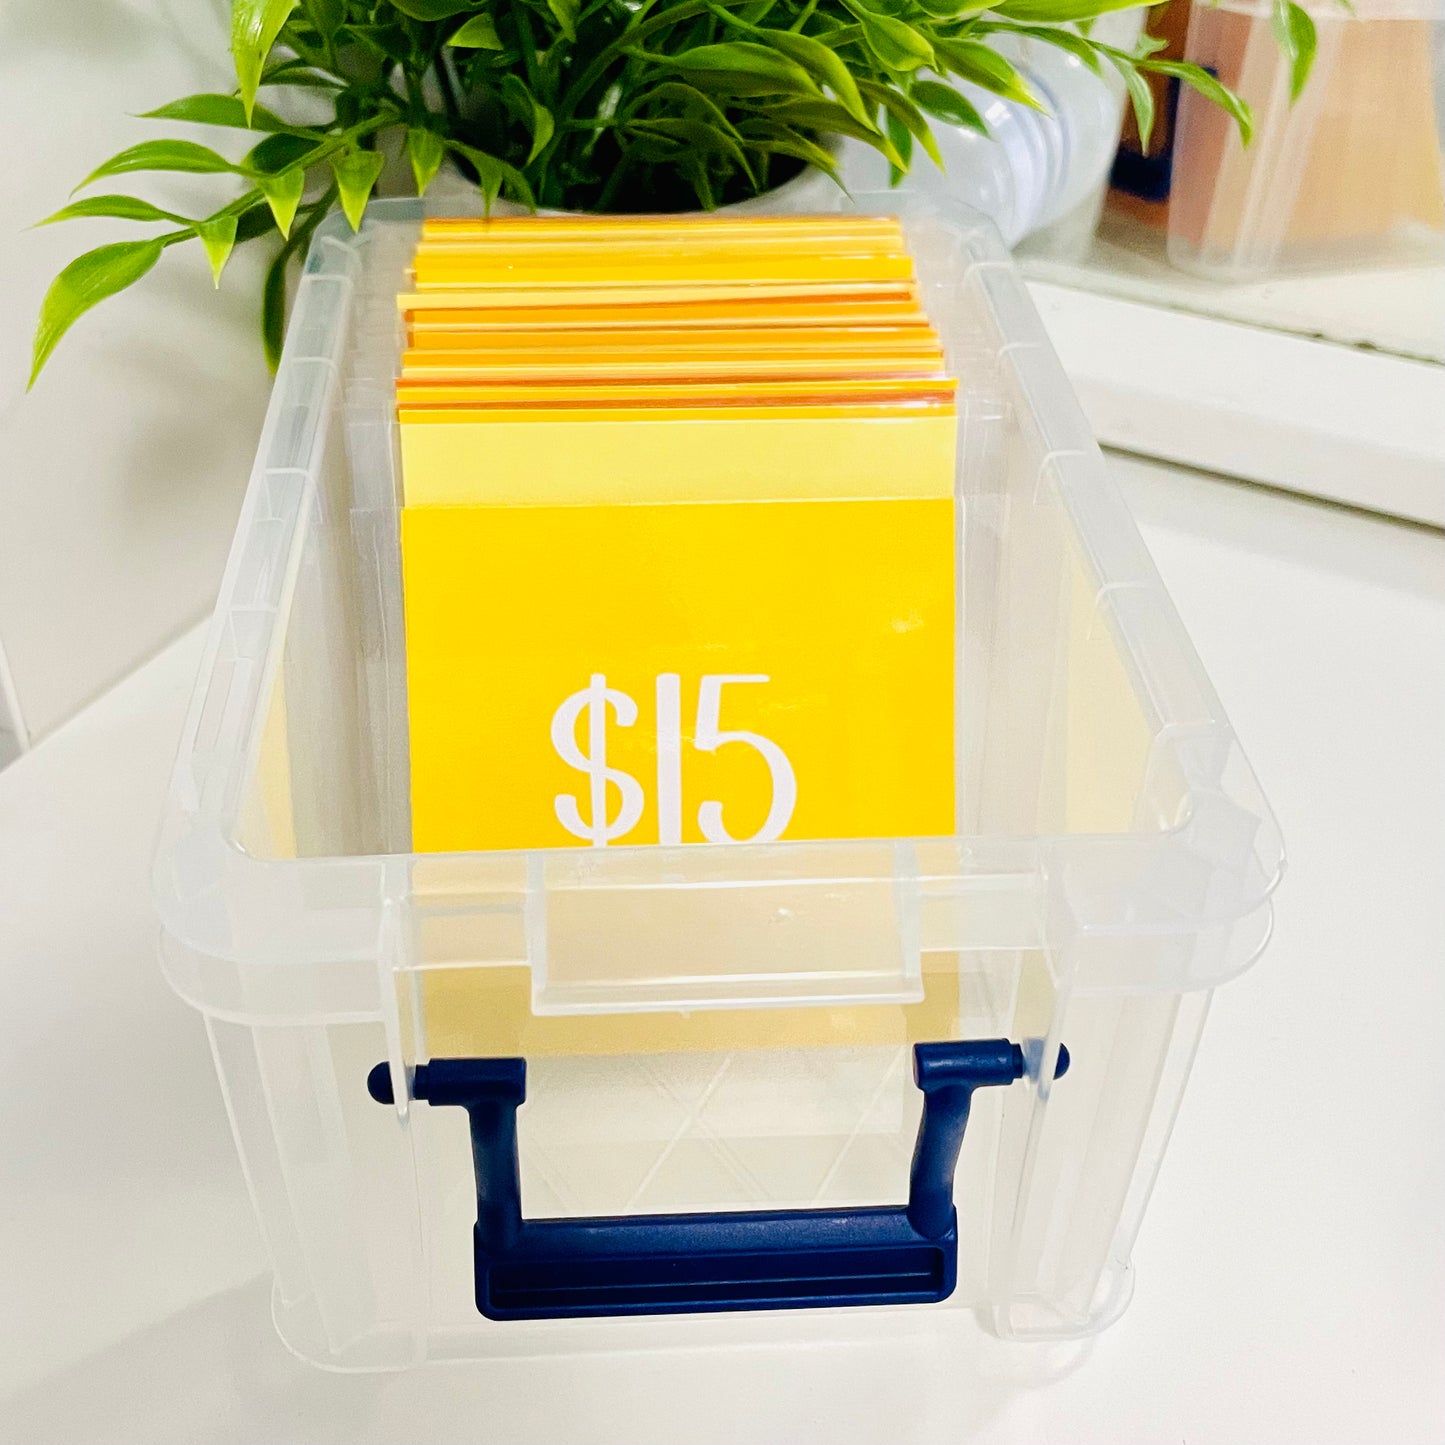 52 Envelope Savings Challenge Box